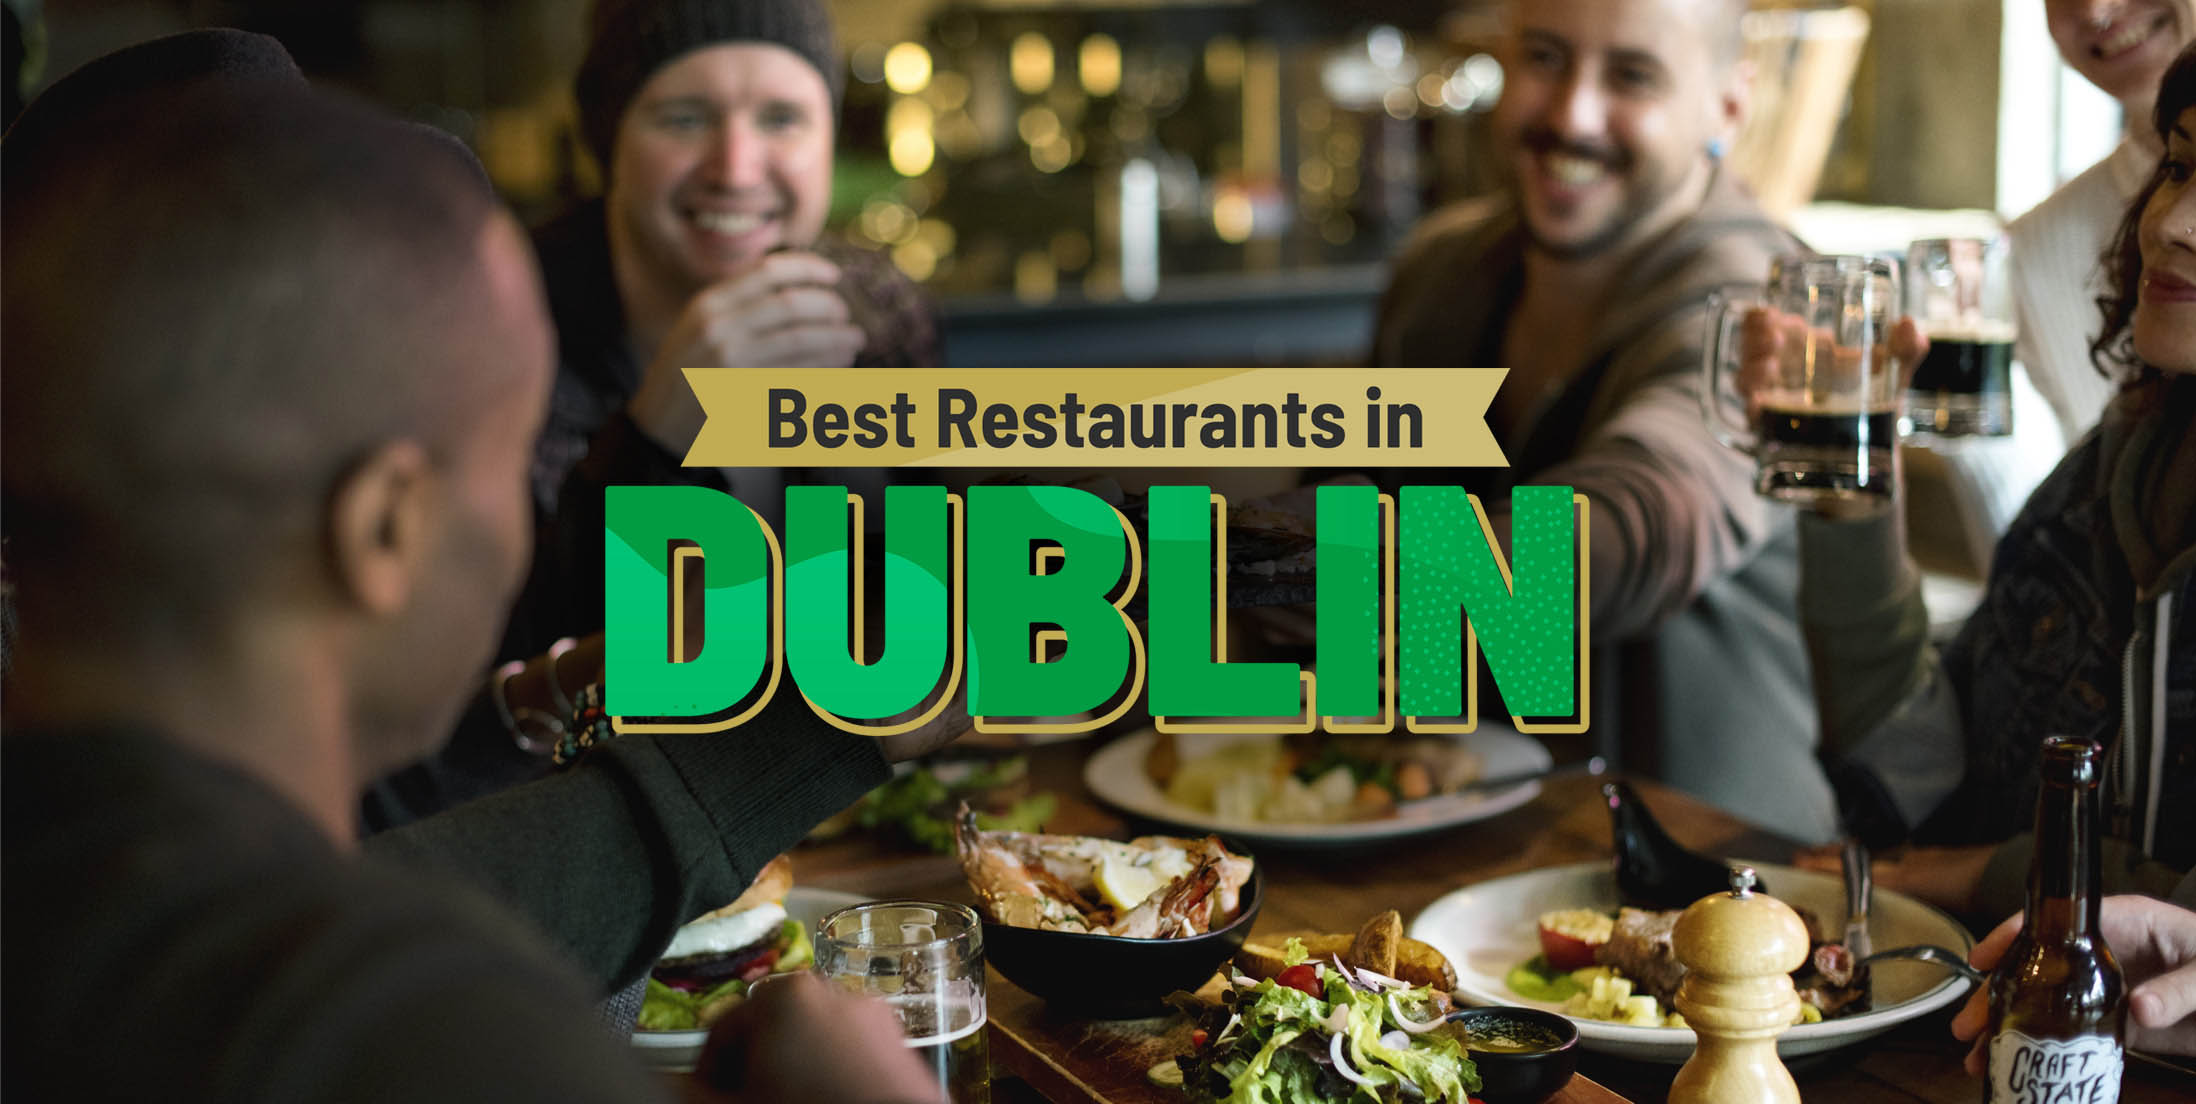 Best Restaurants in Dublin